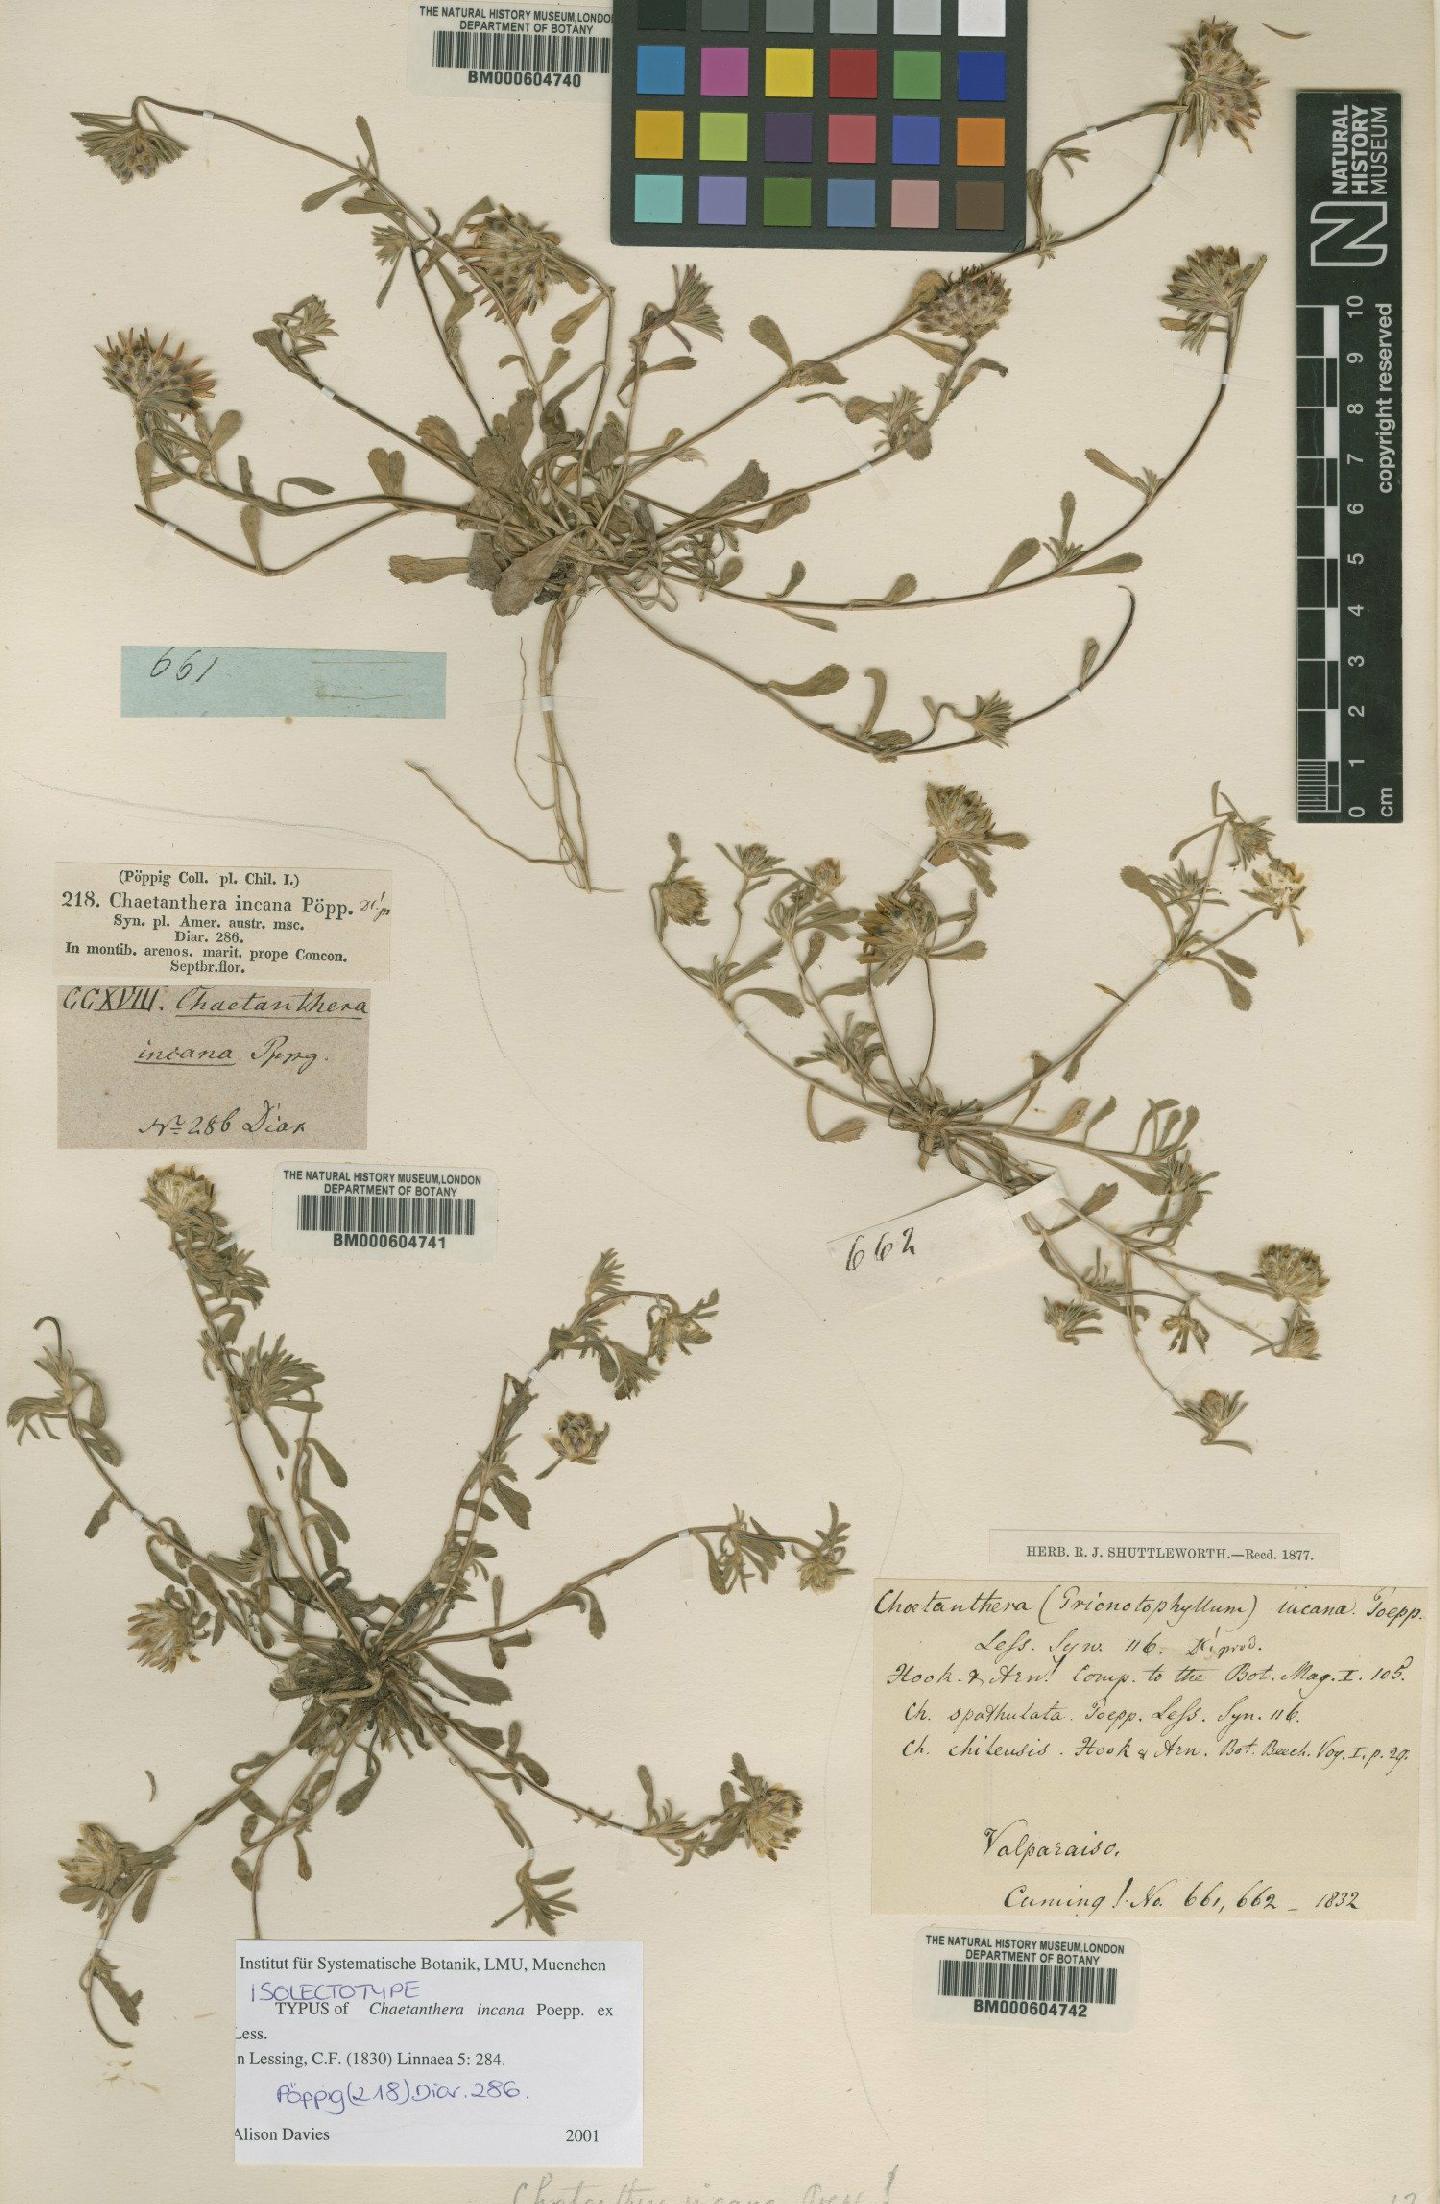 To NHMUK collection (Chaetanthera incana Poepp. ex Less.; Non-Type; NHMUK:ecatalogue:4683116)